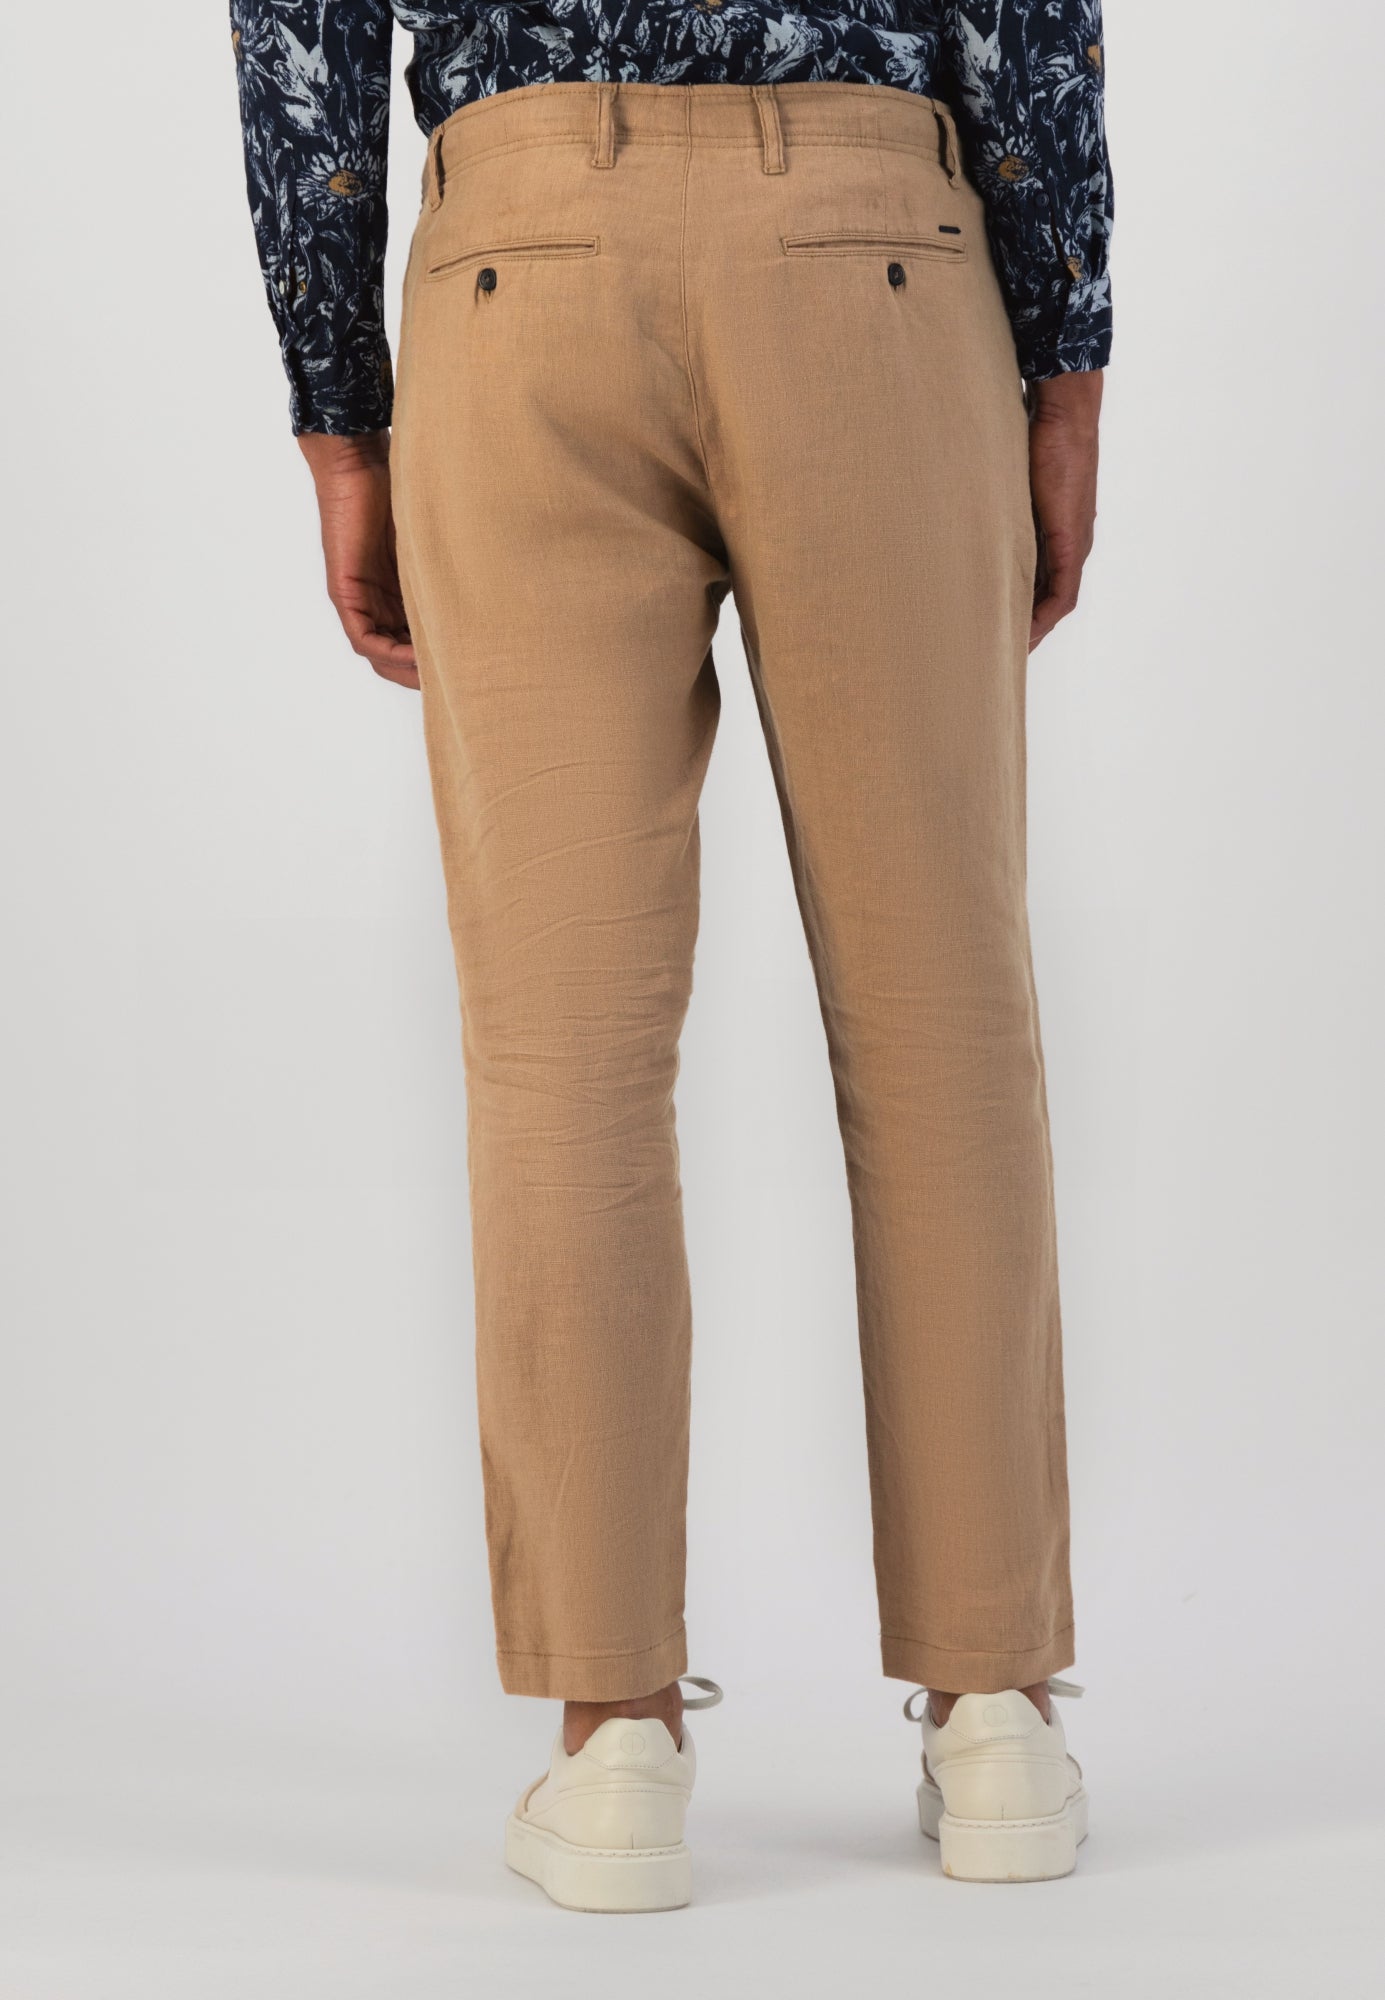 Yuwull Mens Lightweight Pants Men Solid Casual Loose Elastic Waistband  Pocket Cotton Linen Pants Trousers Baggy Pants Jogger Pants Khaki   Walmartcom